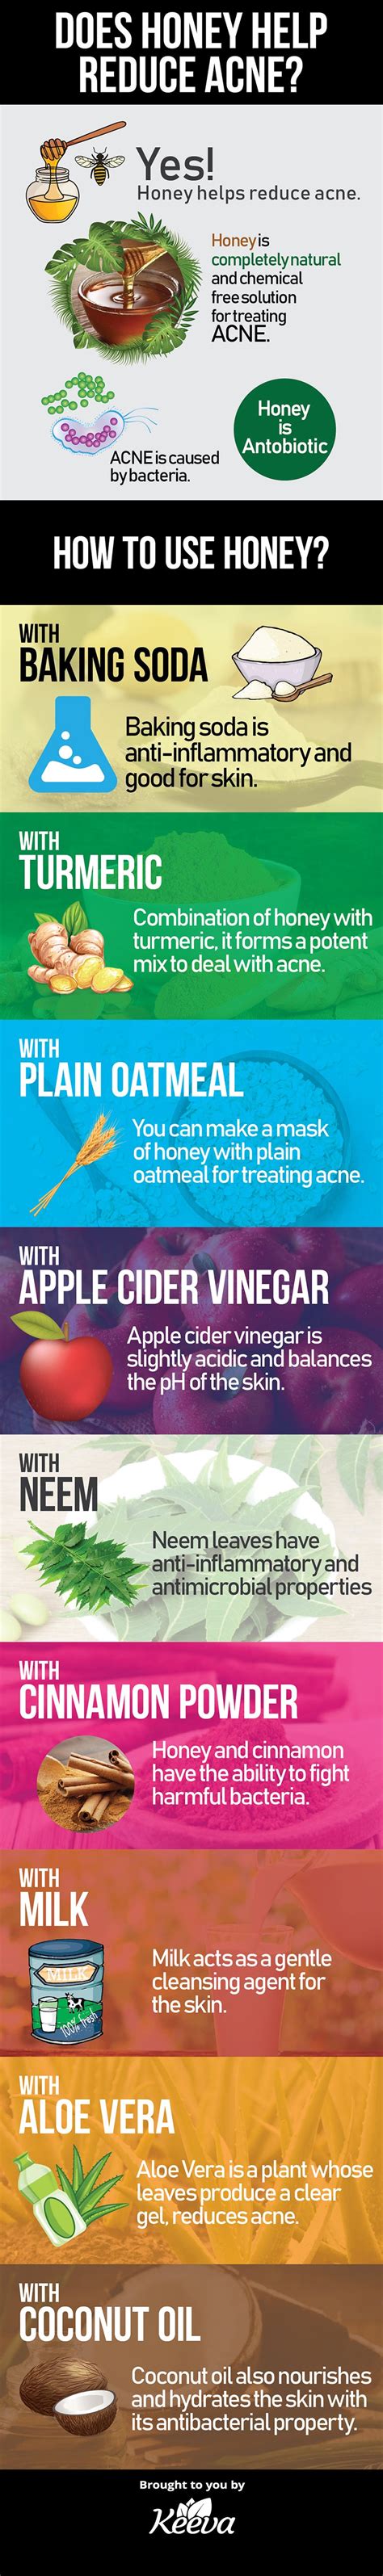 Does Honey Help Reduce Acne